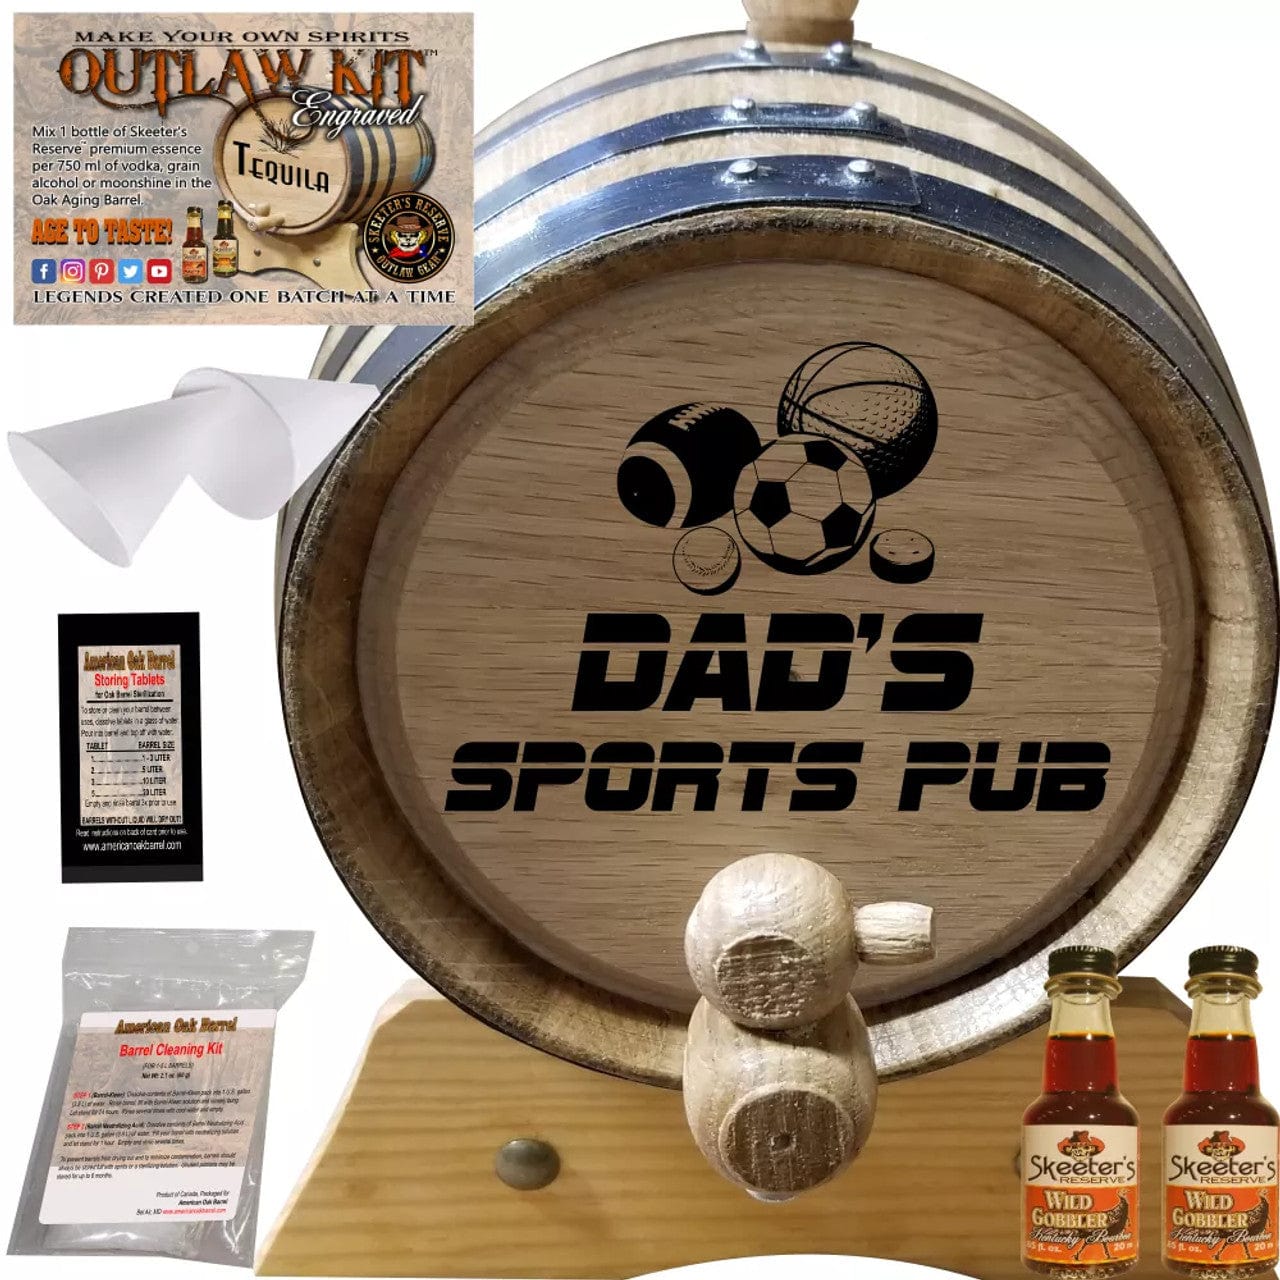 American Oak Barrel Outlaw Kits 1 Liter (.26 gallon) / Cherry Bourbon American Oak Barrel Engraved Outlaw Kit™ (012) Dad's Sports Pub - Create Your Own Spirits